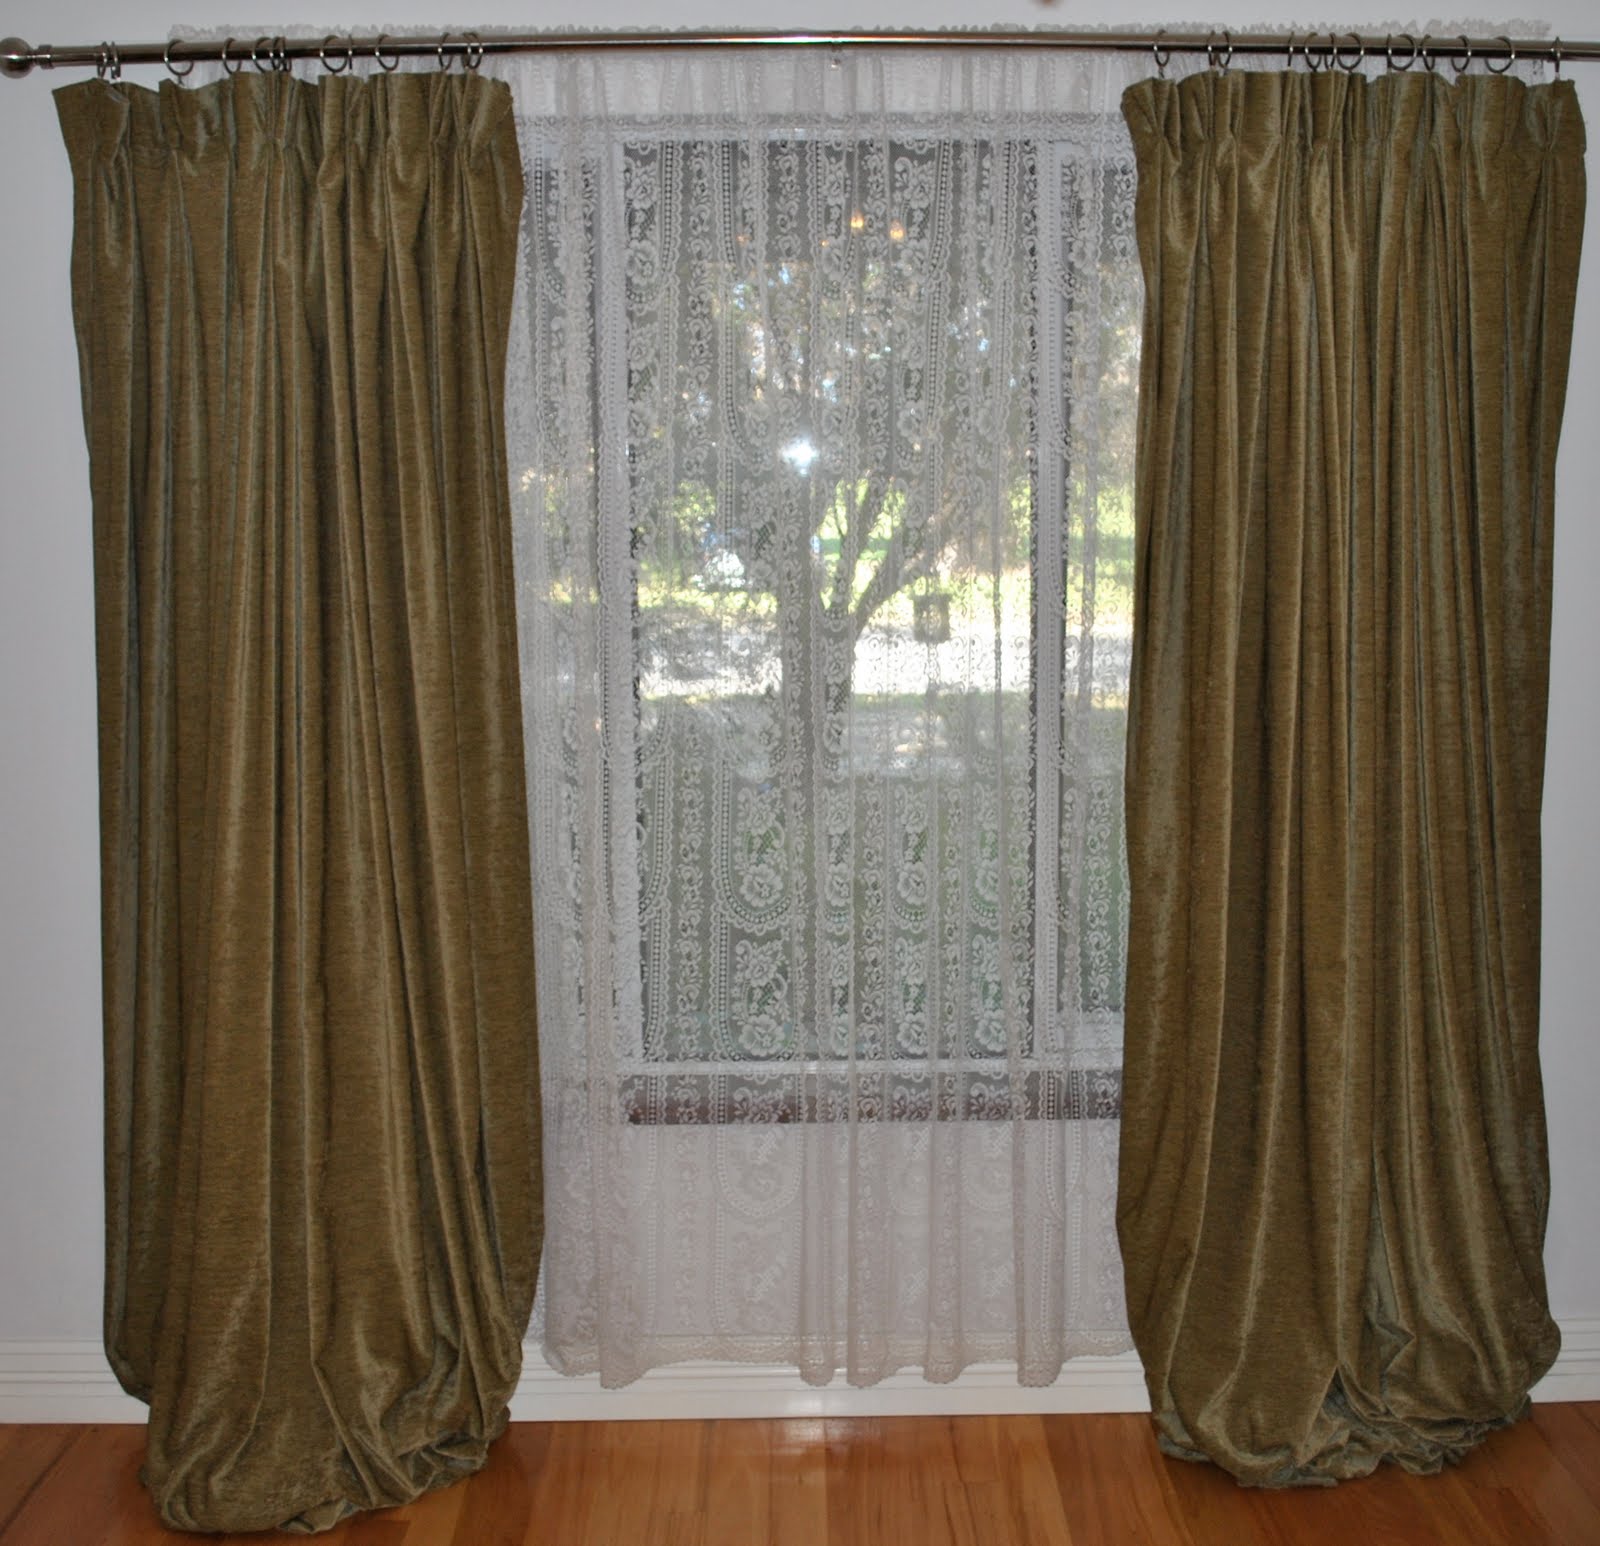 Next Curtains eBay